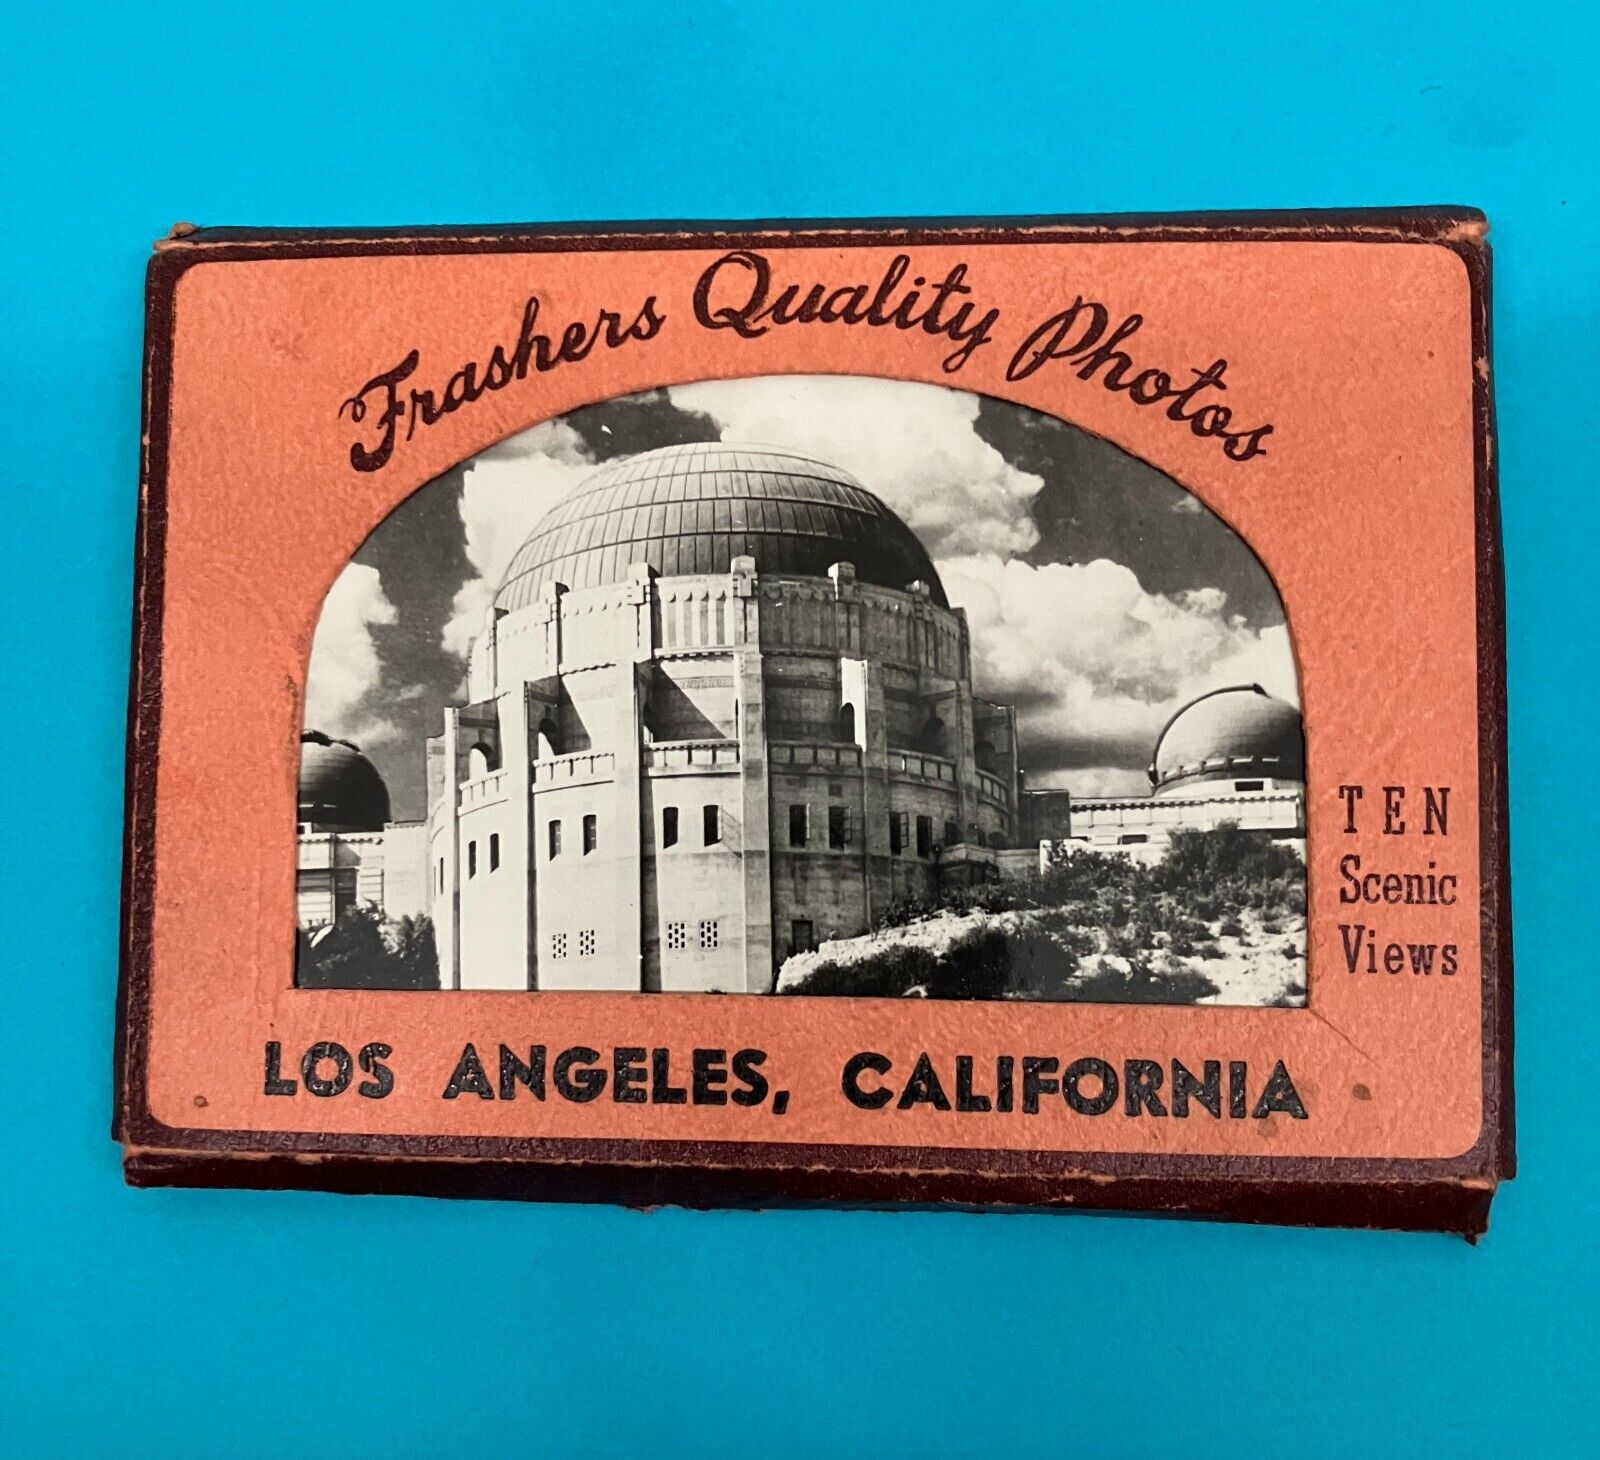 Frashers Quality Photos-Los Angeles, California-Ten Scenic Views